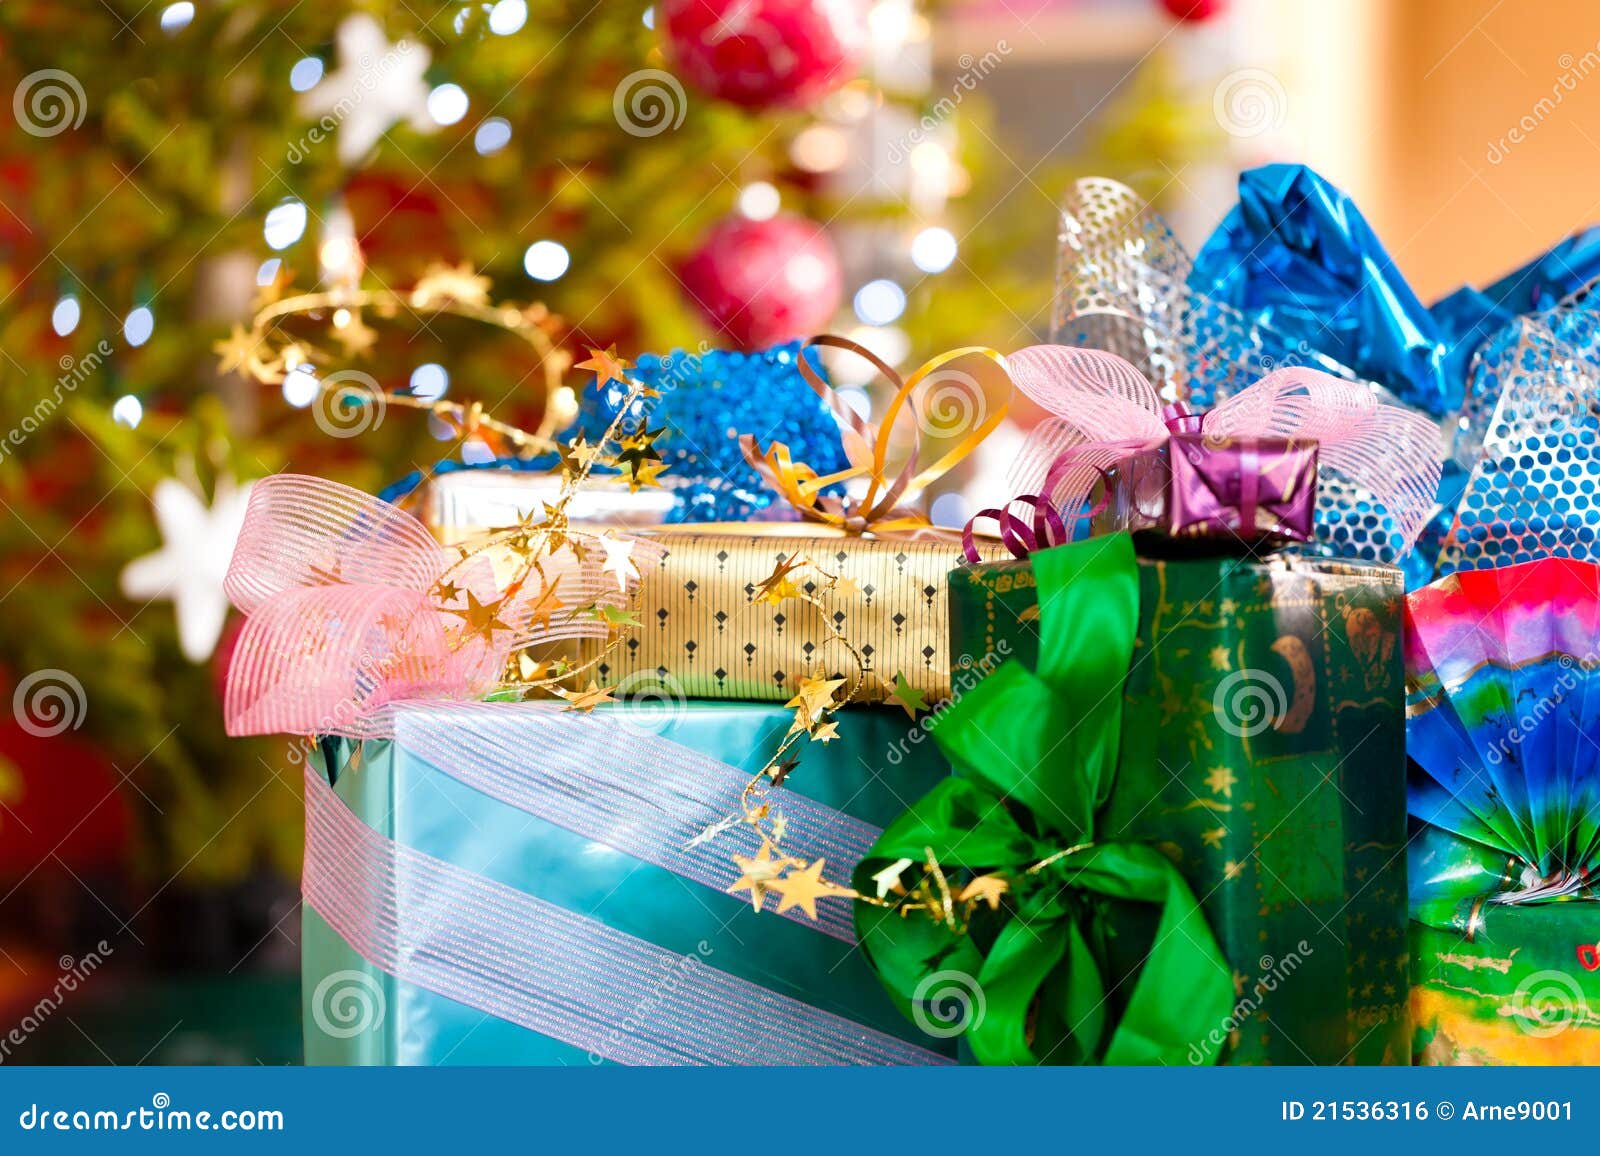 christmas gifts under x-mas tree